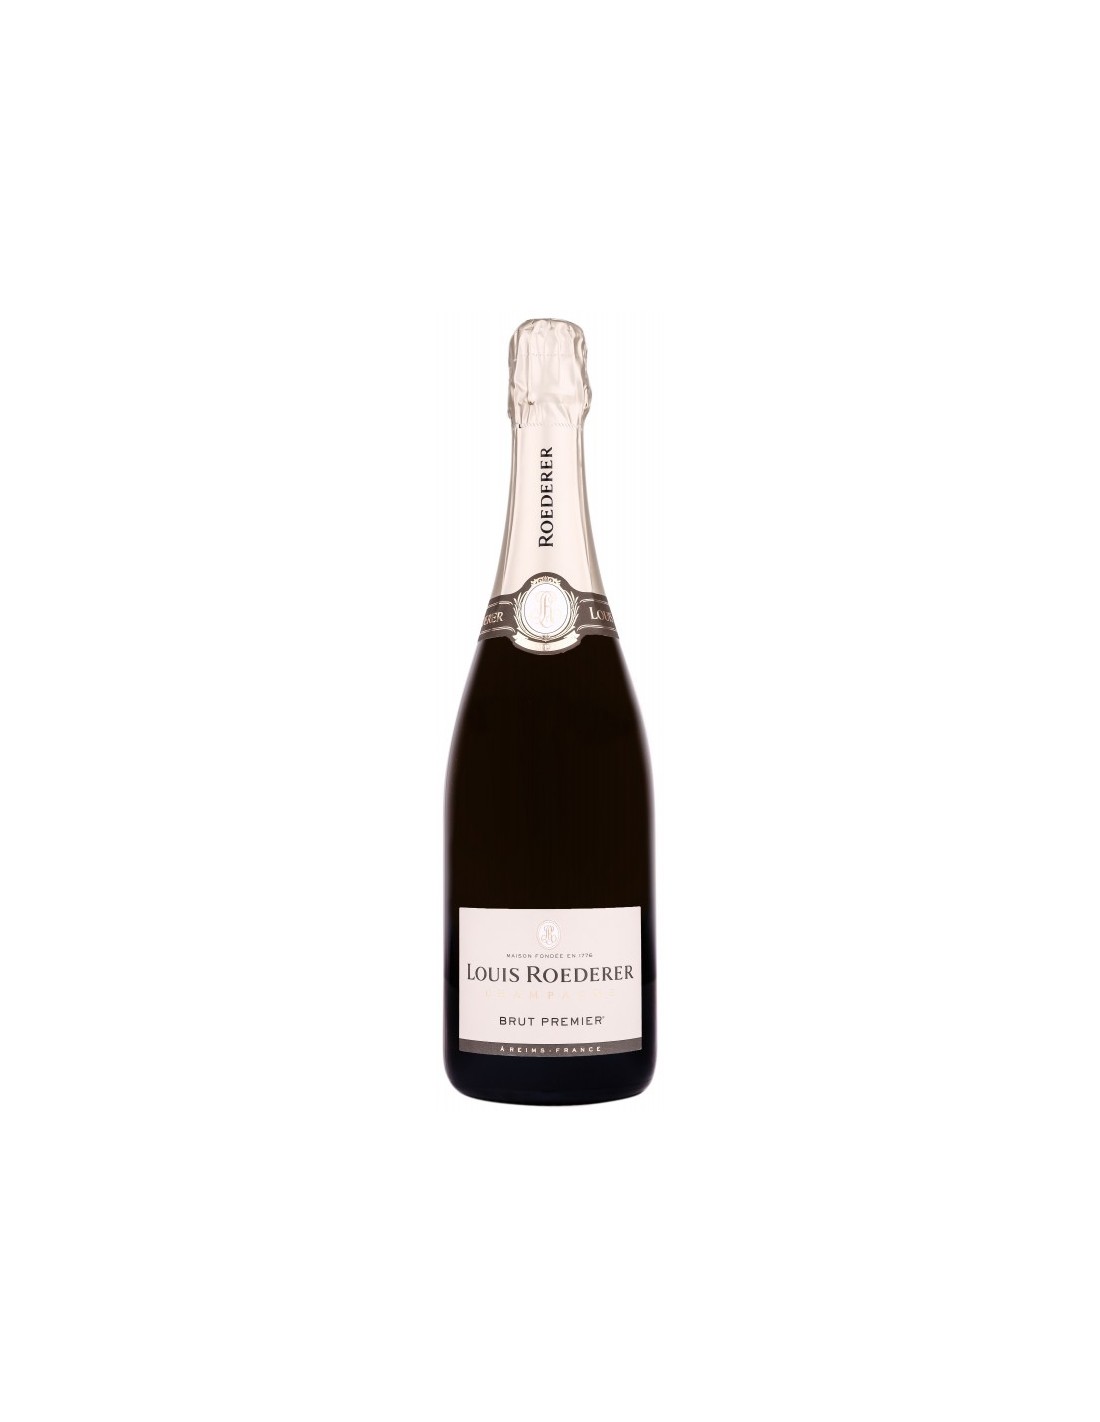 Sampanie Louis Roederer Premier Brut Champagne, 0.75L, 12% alc., Franta alcooldiscount.ro